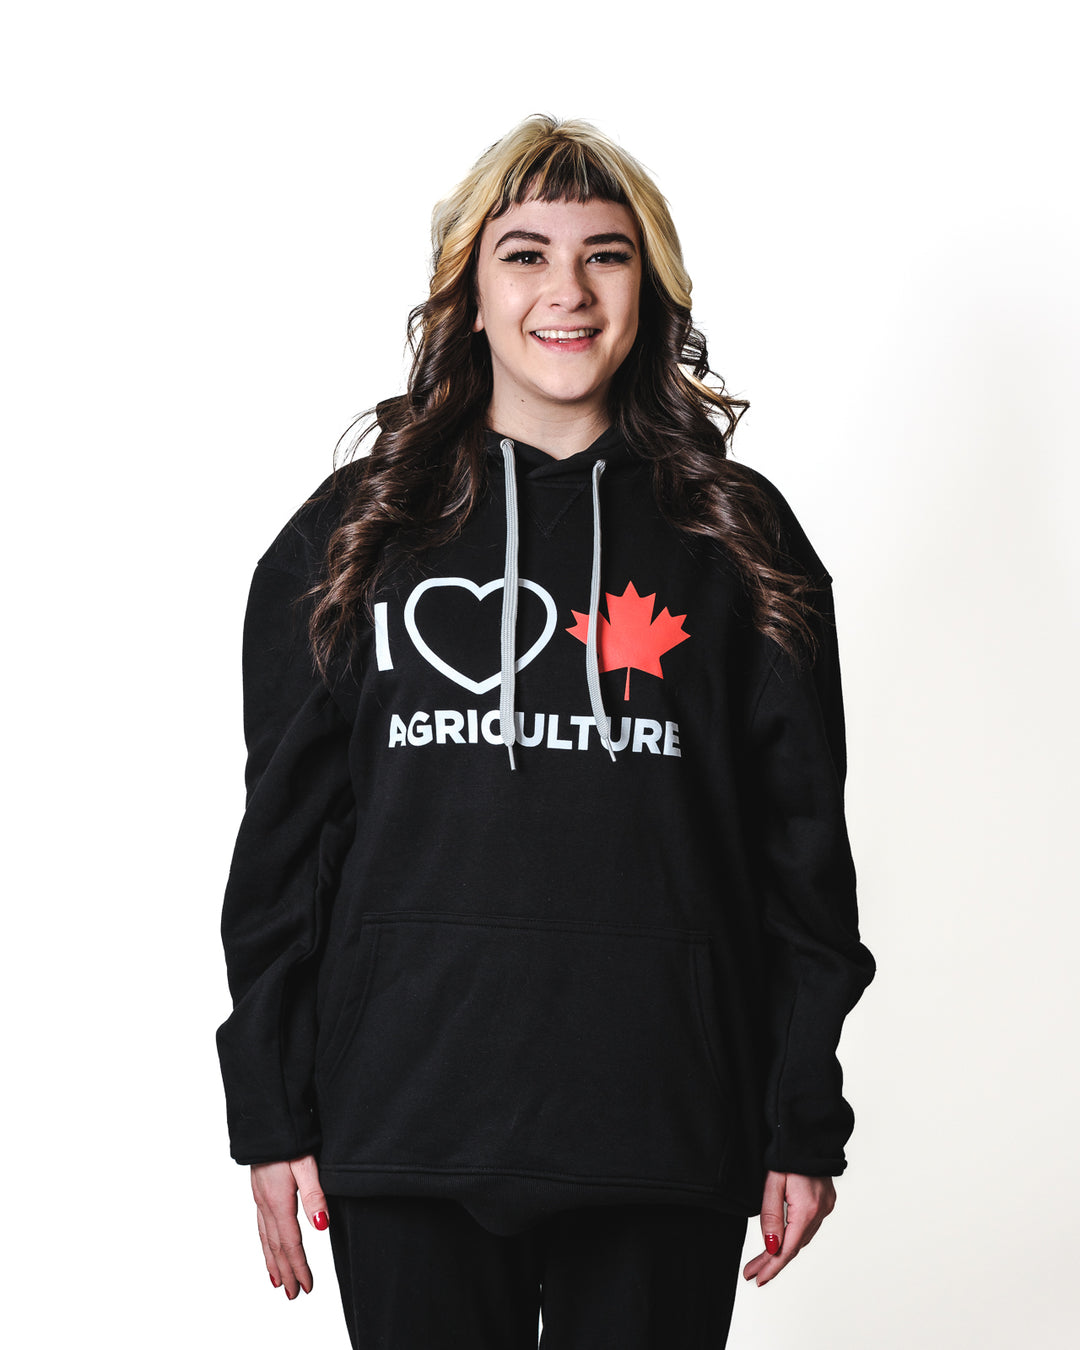 50 Reasons We Love -  Canada